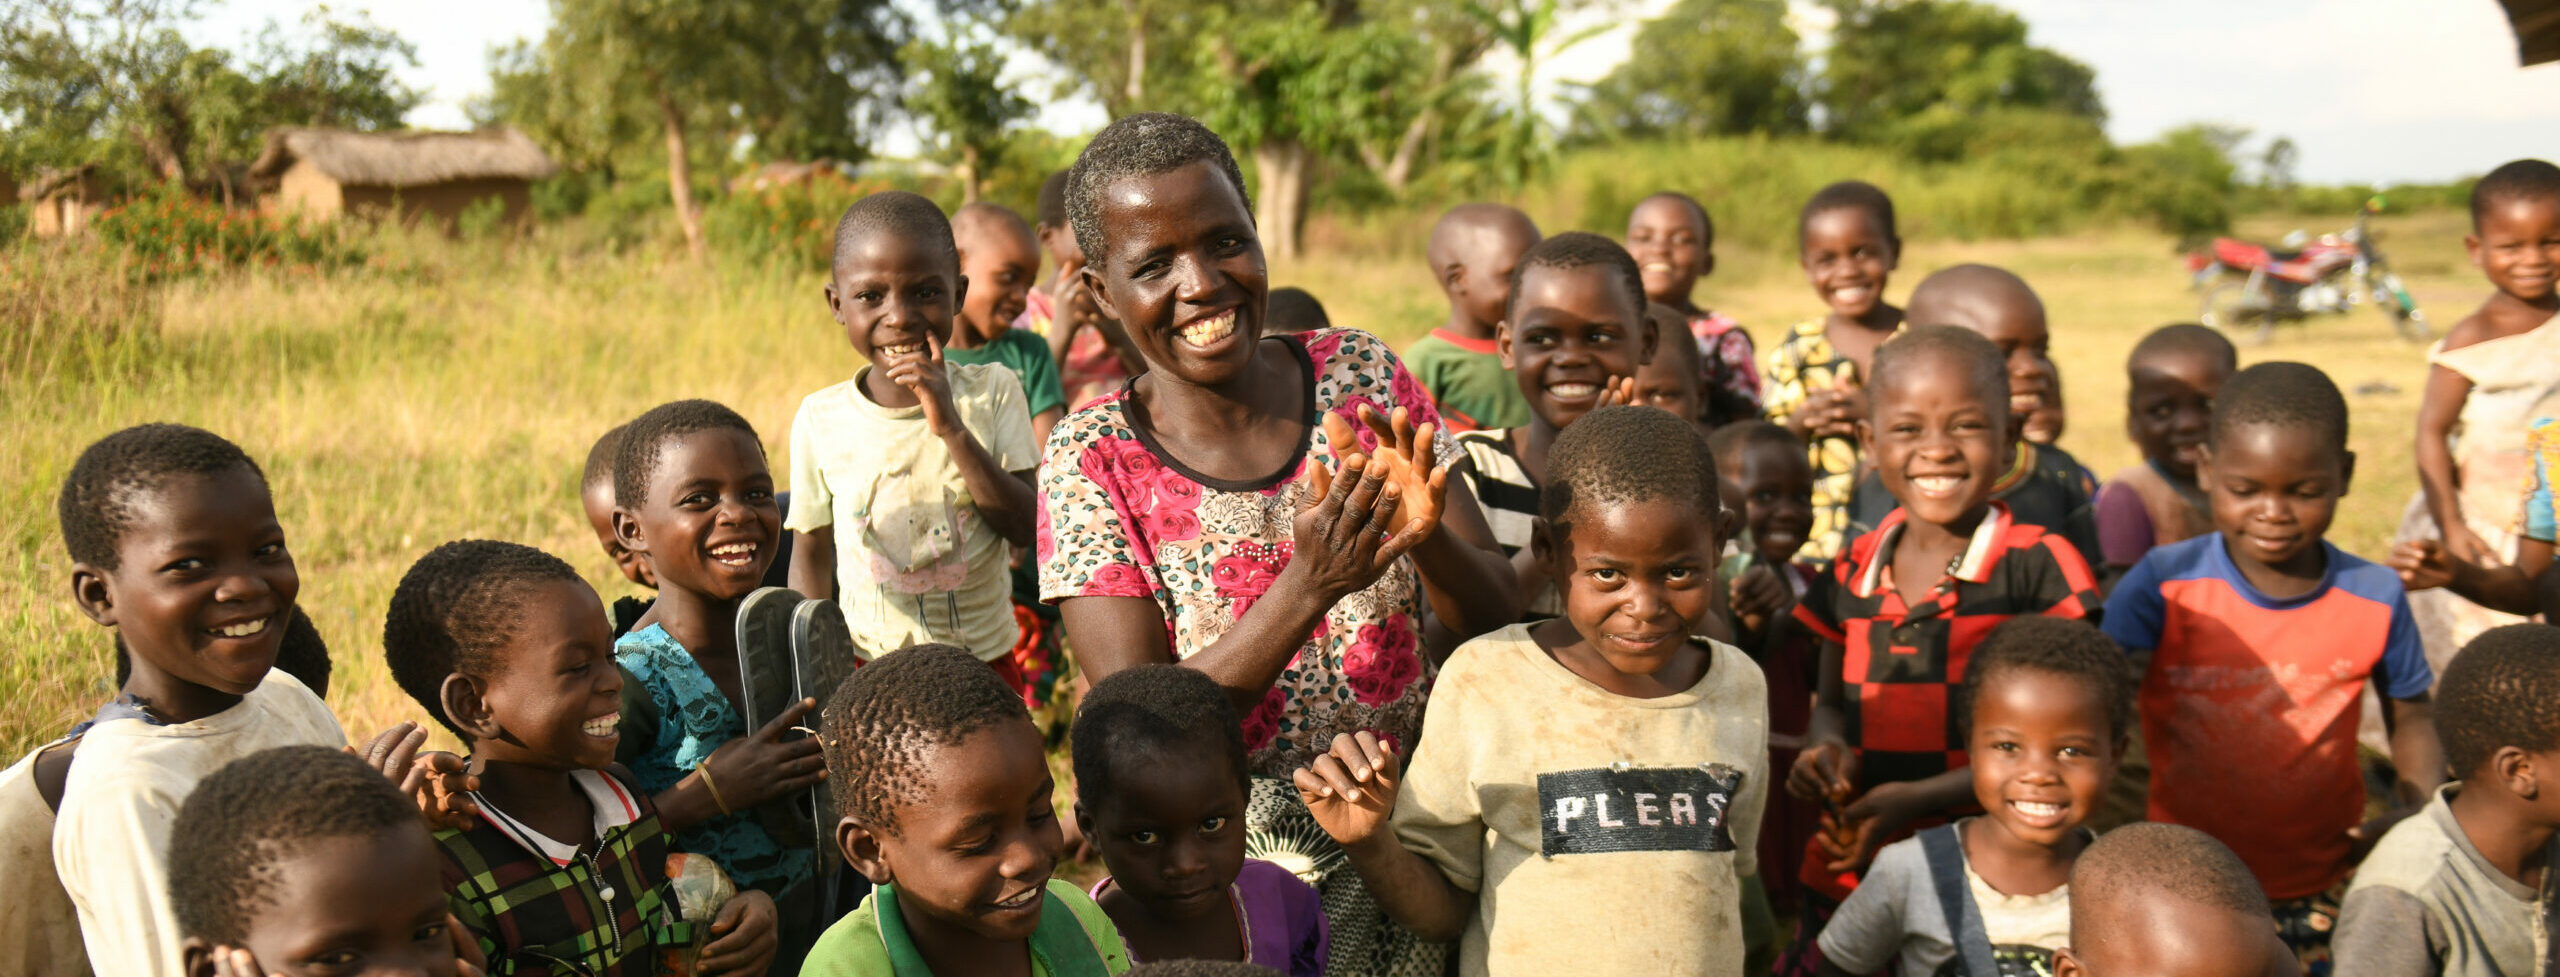 Childrens Corner facilitator plays with children in Malawi